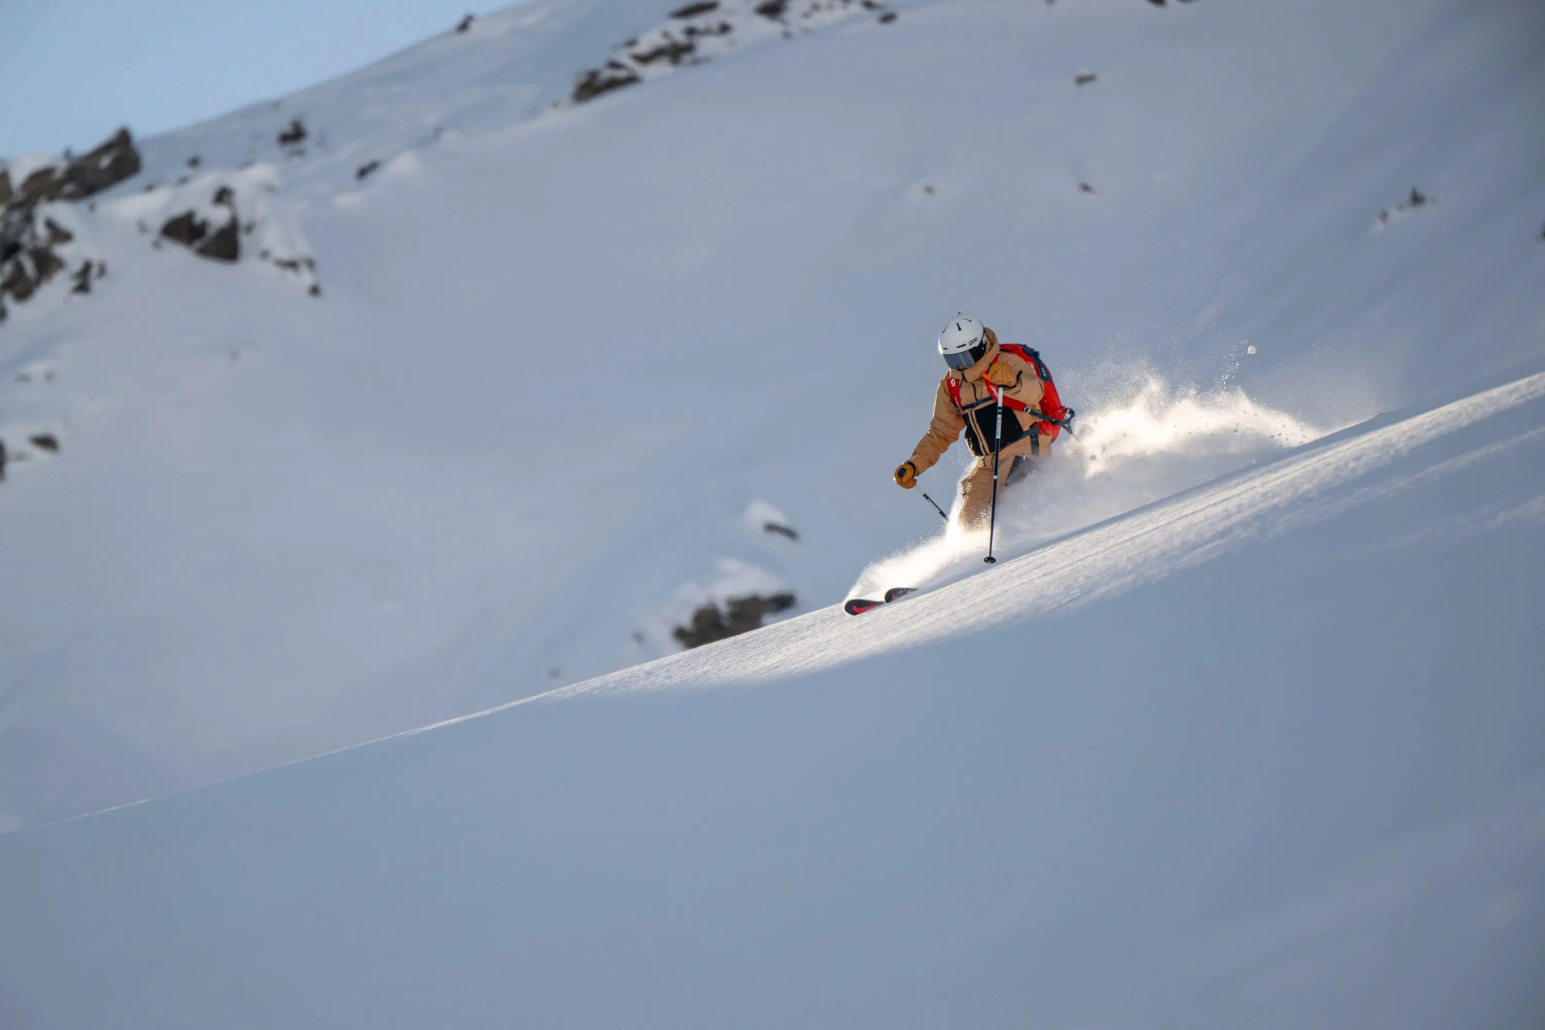 Explore the best off-piste terrain while ski touring